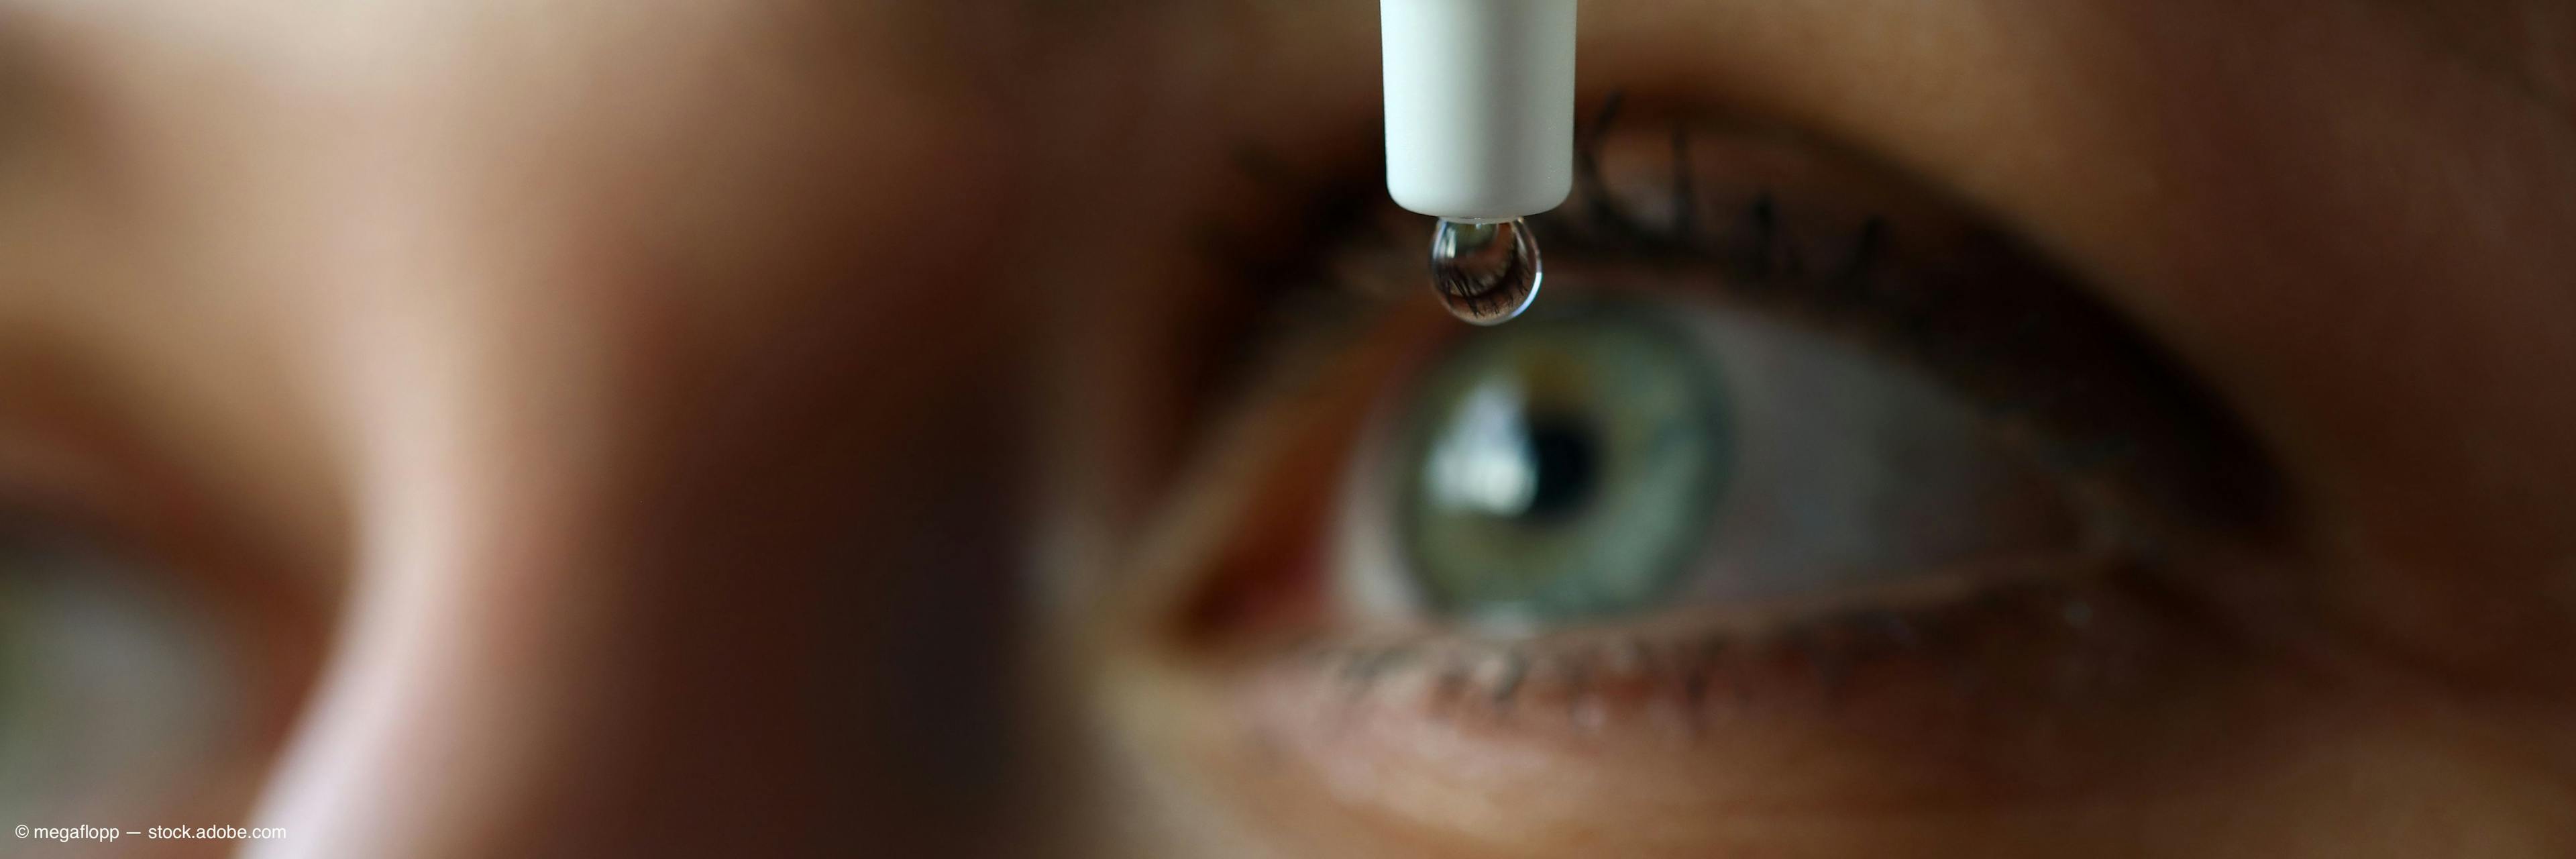 New options are on horizon for presbyopia-correcting drops